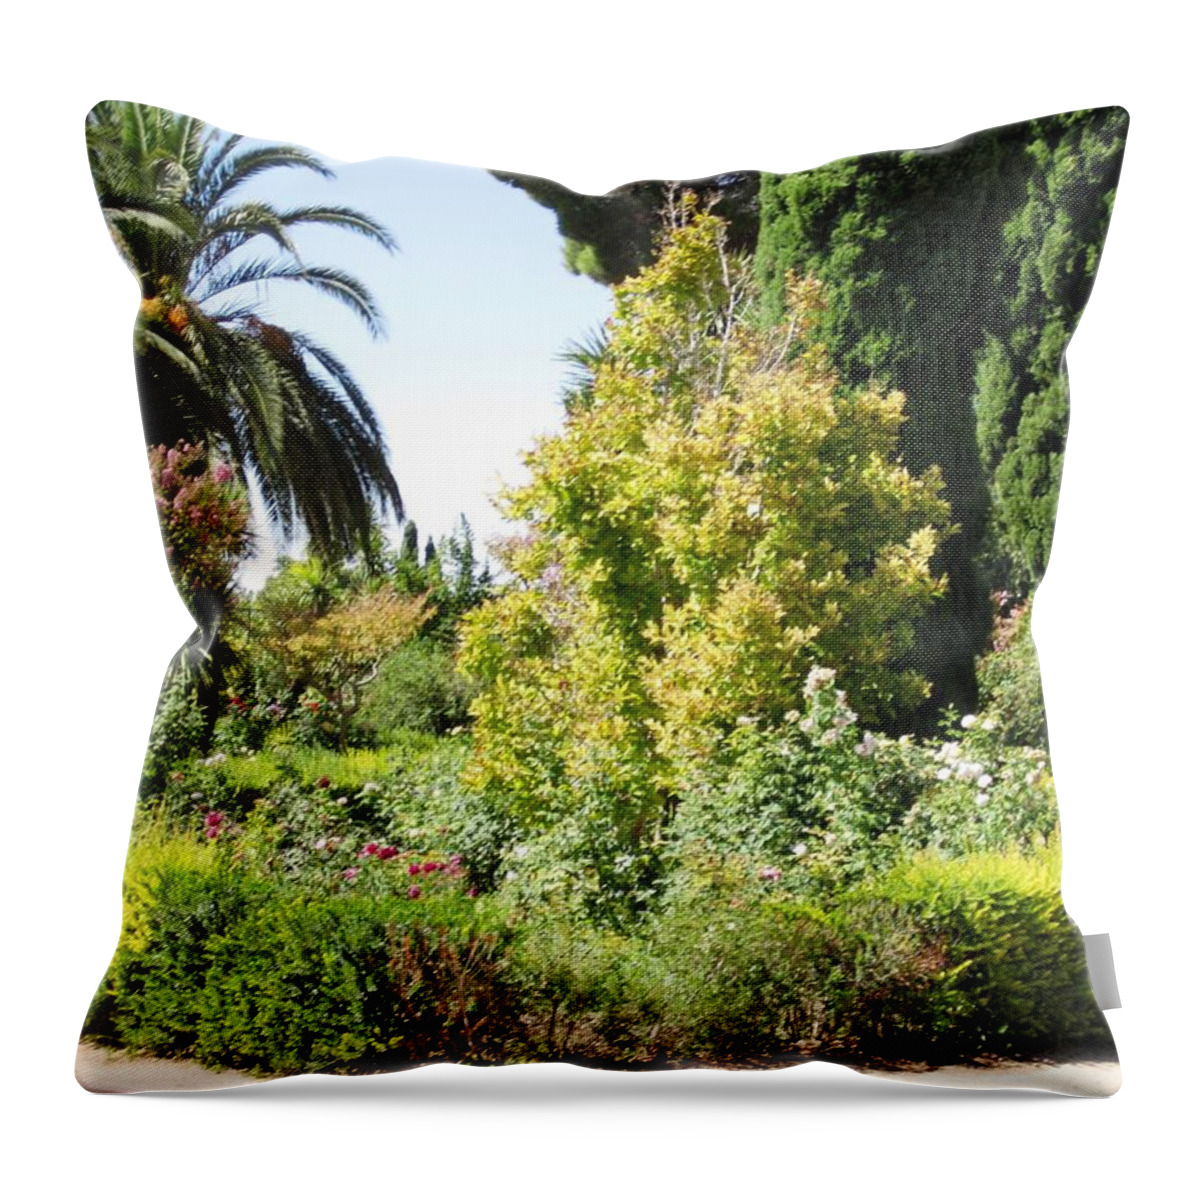 Granada Throw Pillow featuring the photograph Spanish Garden by John Shiron